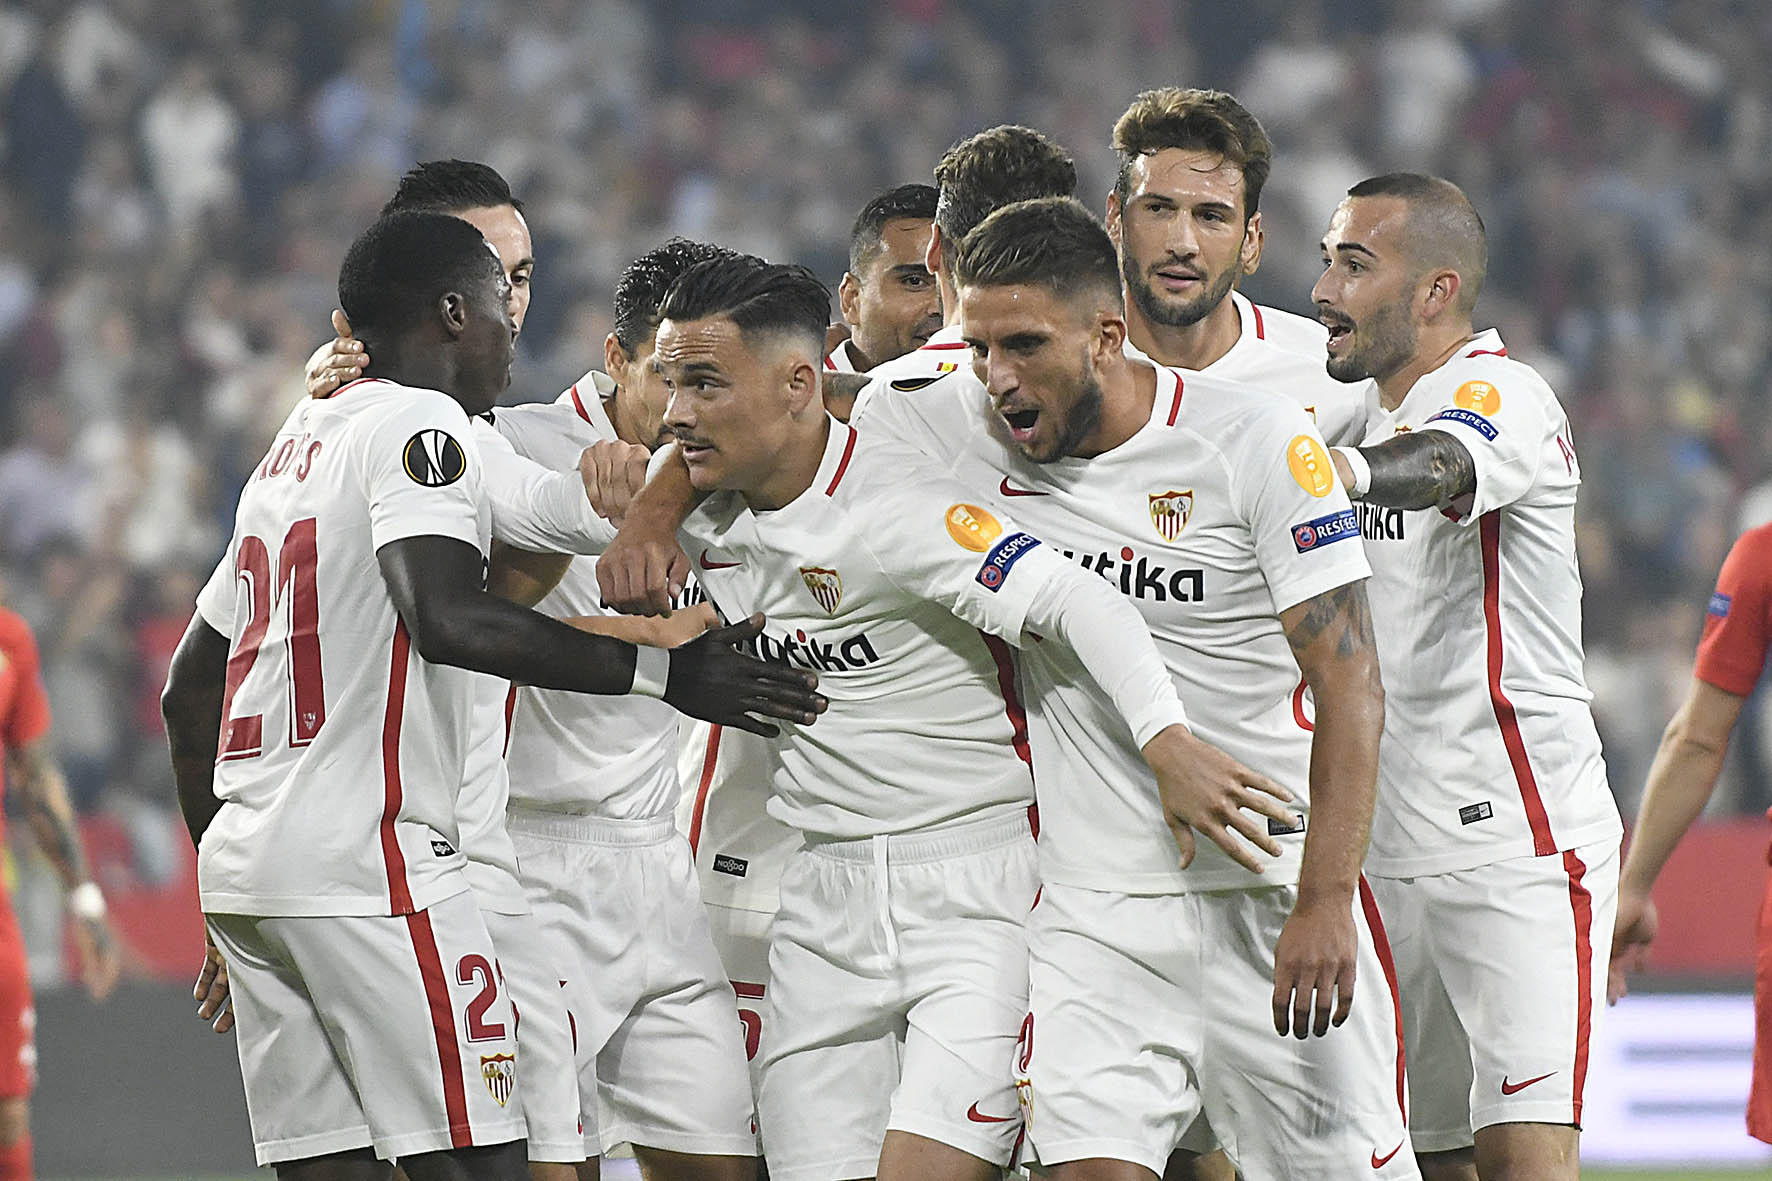 Sevilla FC celebrate a goal against Akhisarspor